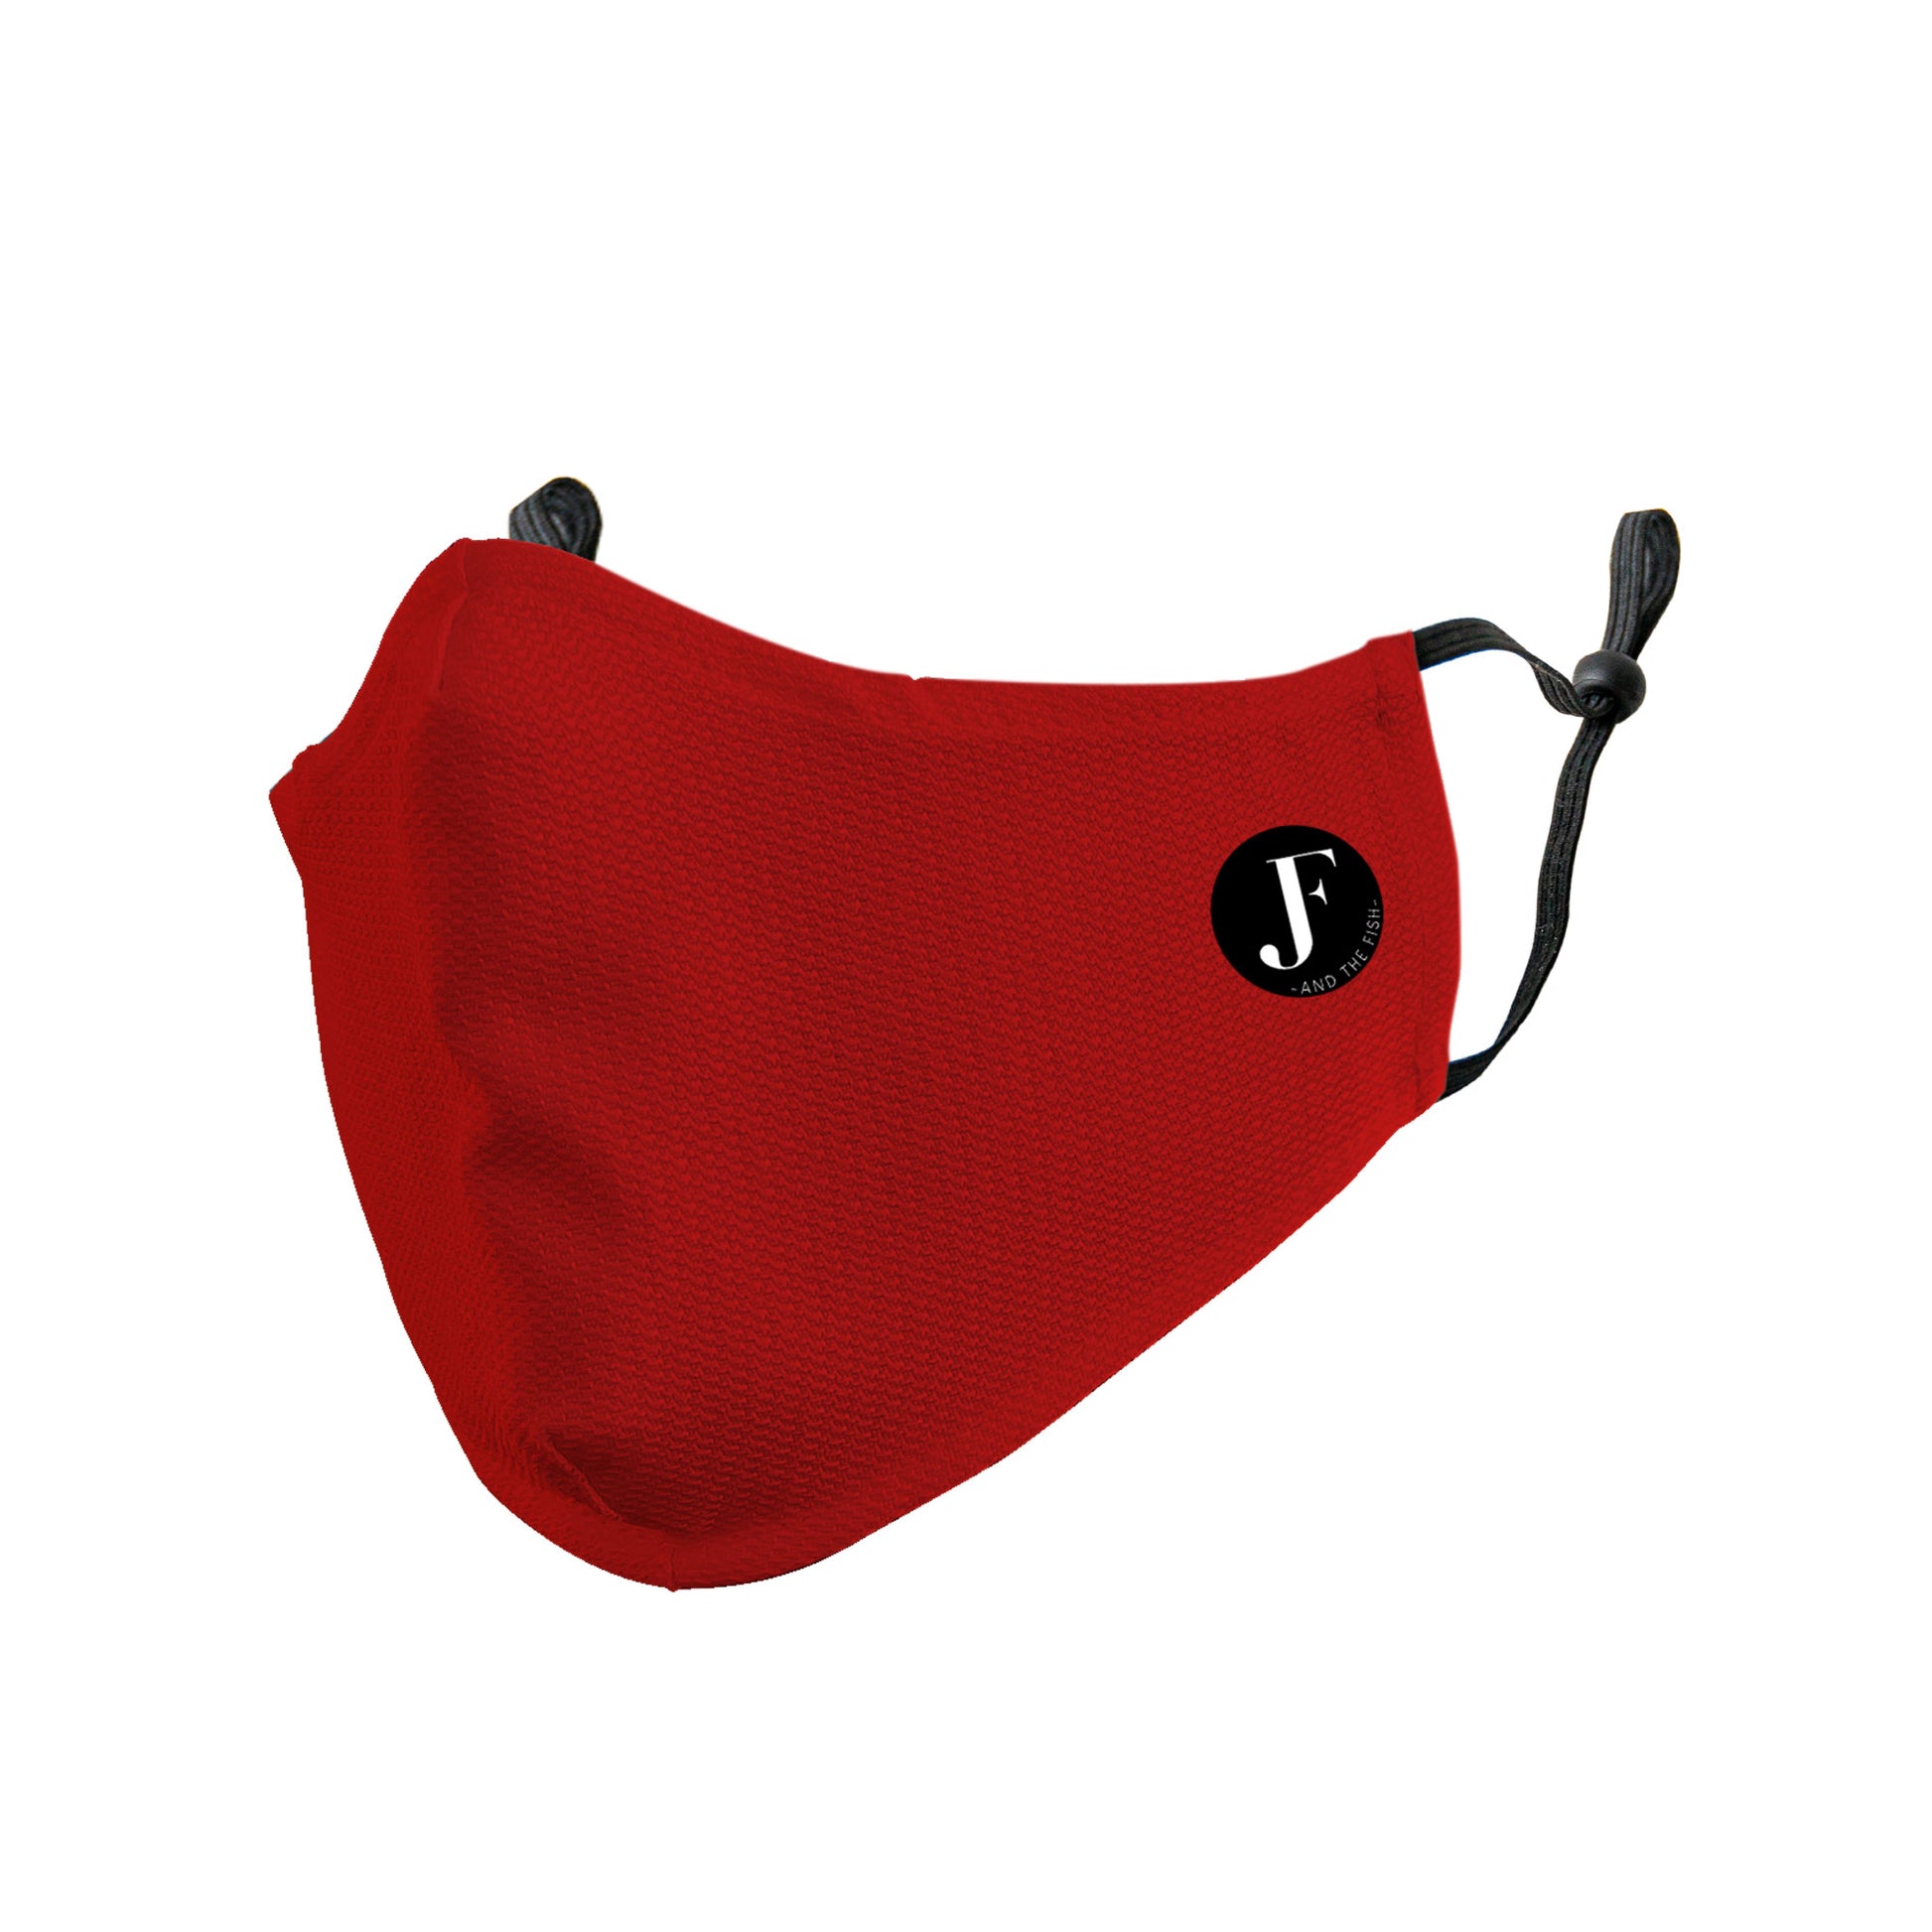 Jackie and the fish mondmasker rood met logo zwart zwarte oren